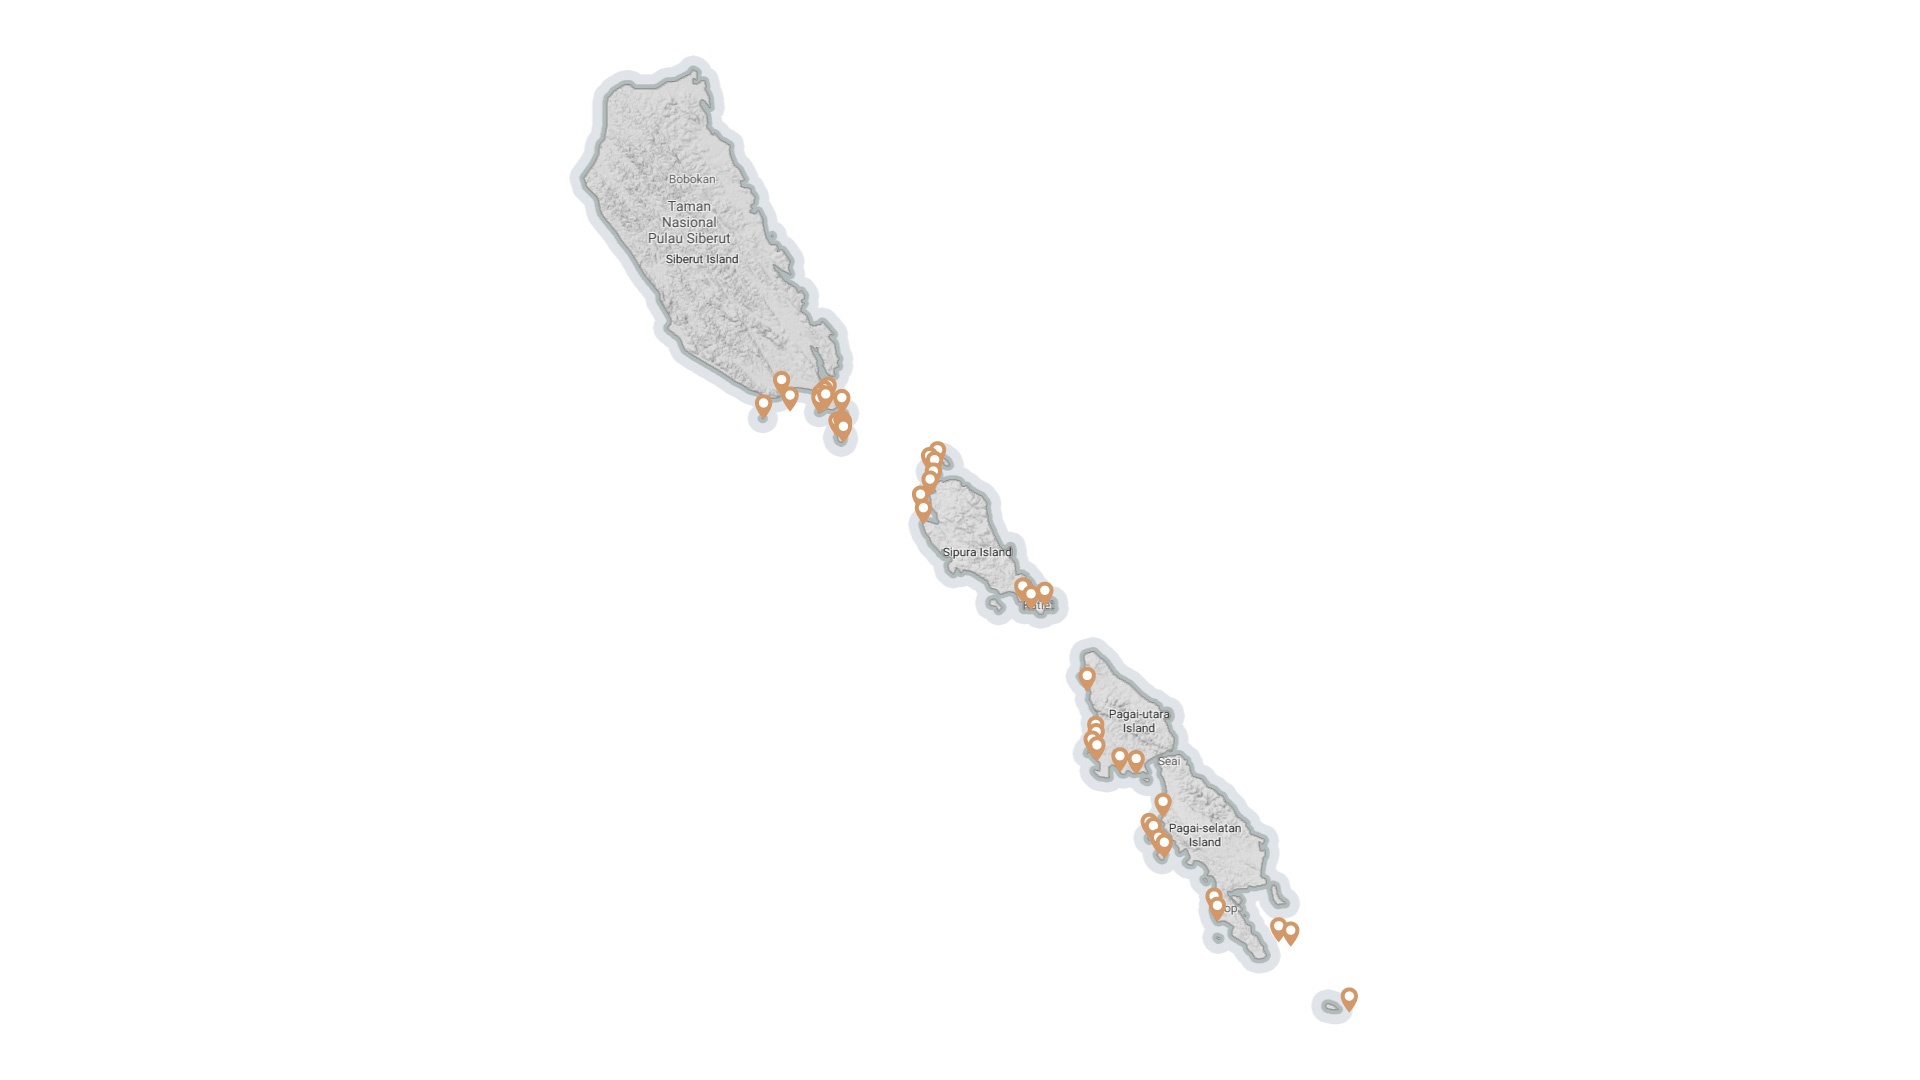 mentawai-islands-surf-spots-map